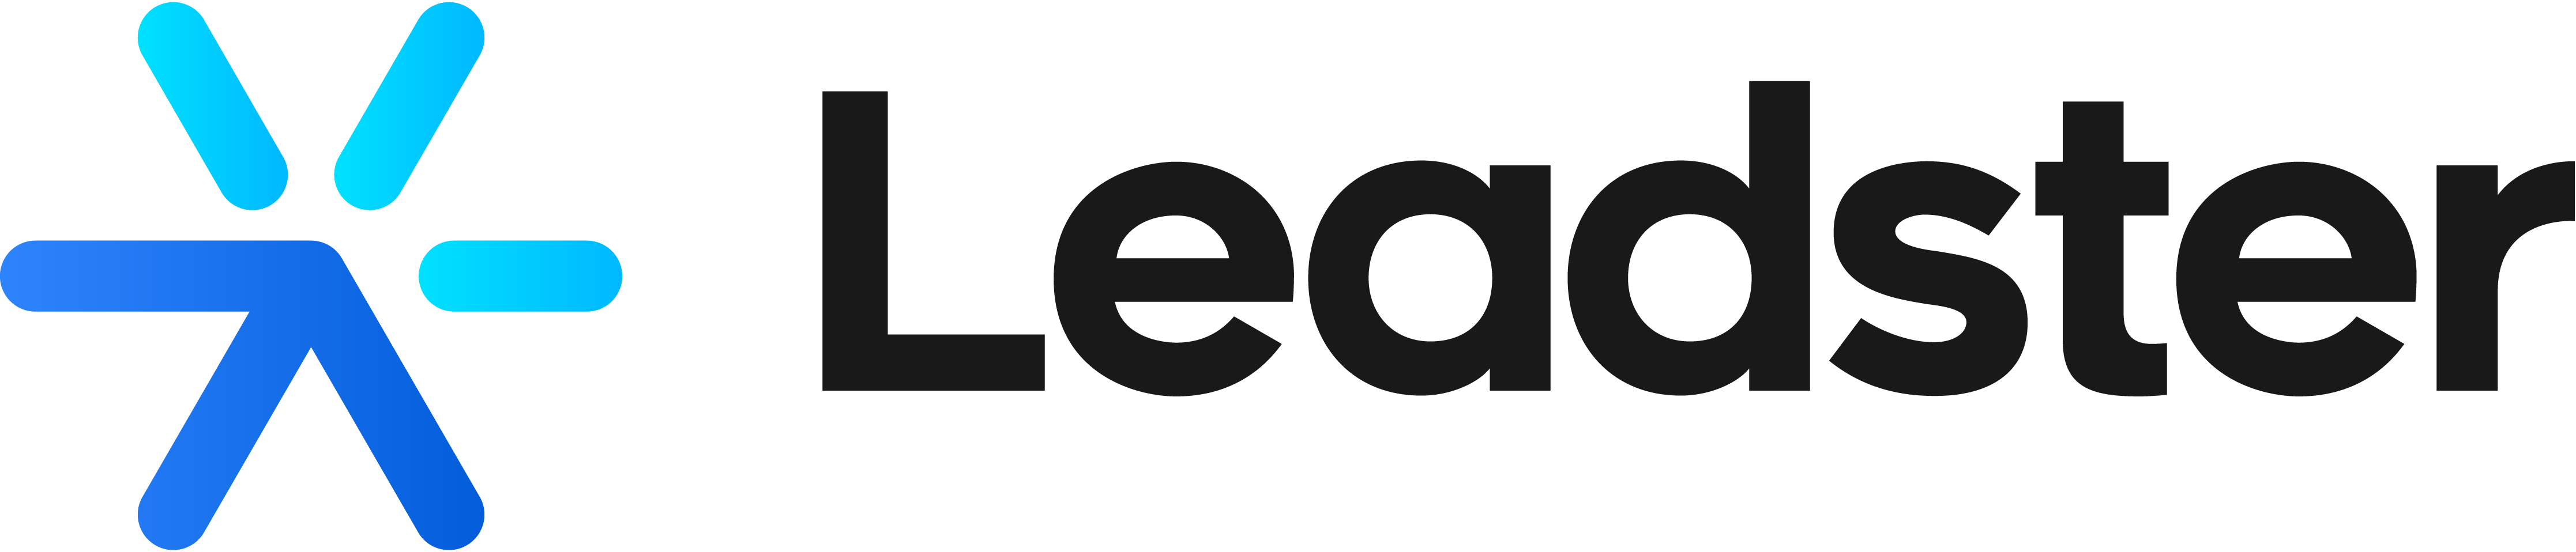 Logo leadster